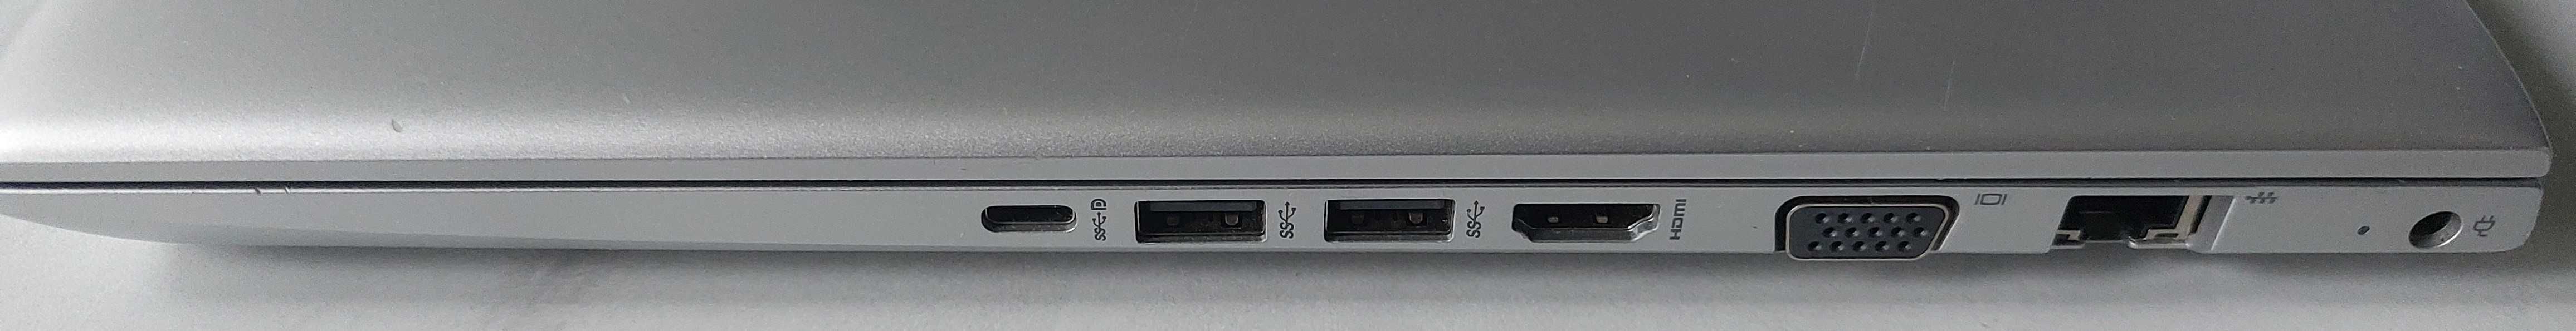 Laptop HP 450 G5